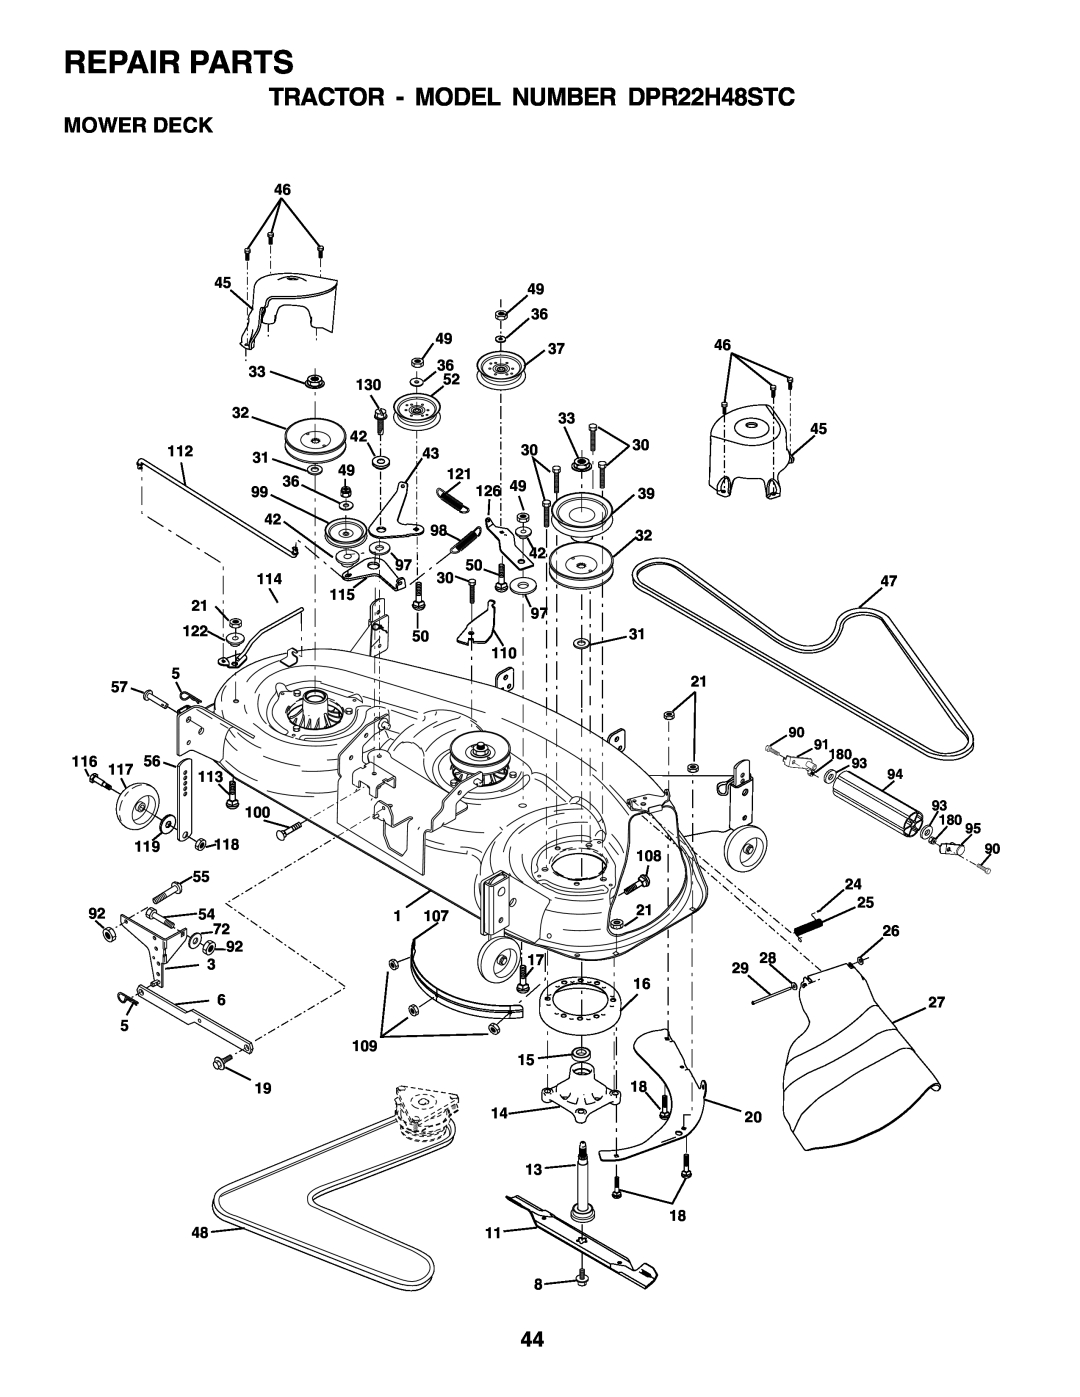 Poulan 180200 owner manual Repair Parts, TRACTOR - MODEL NUMBER DPR22H48STC, Mower Deck 